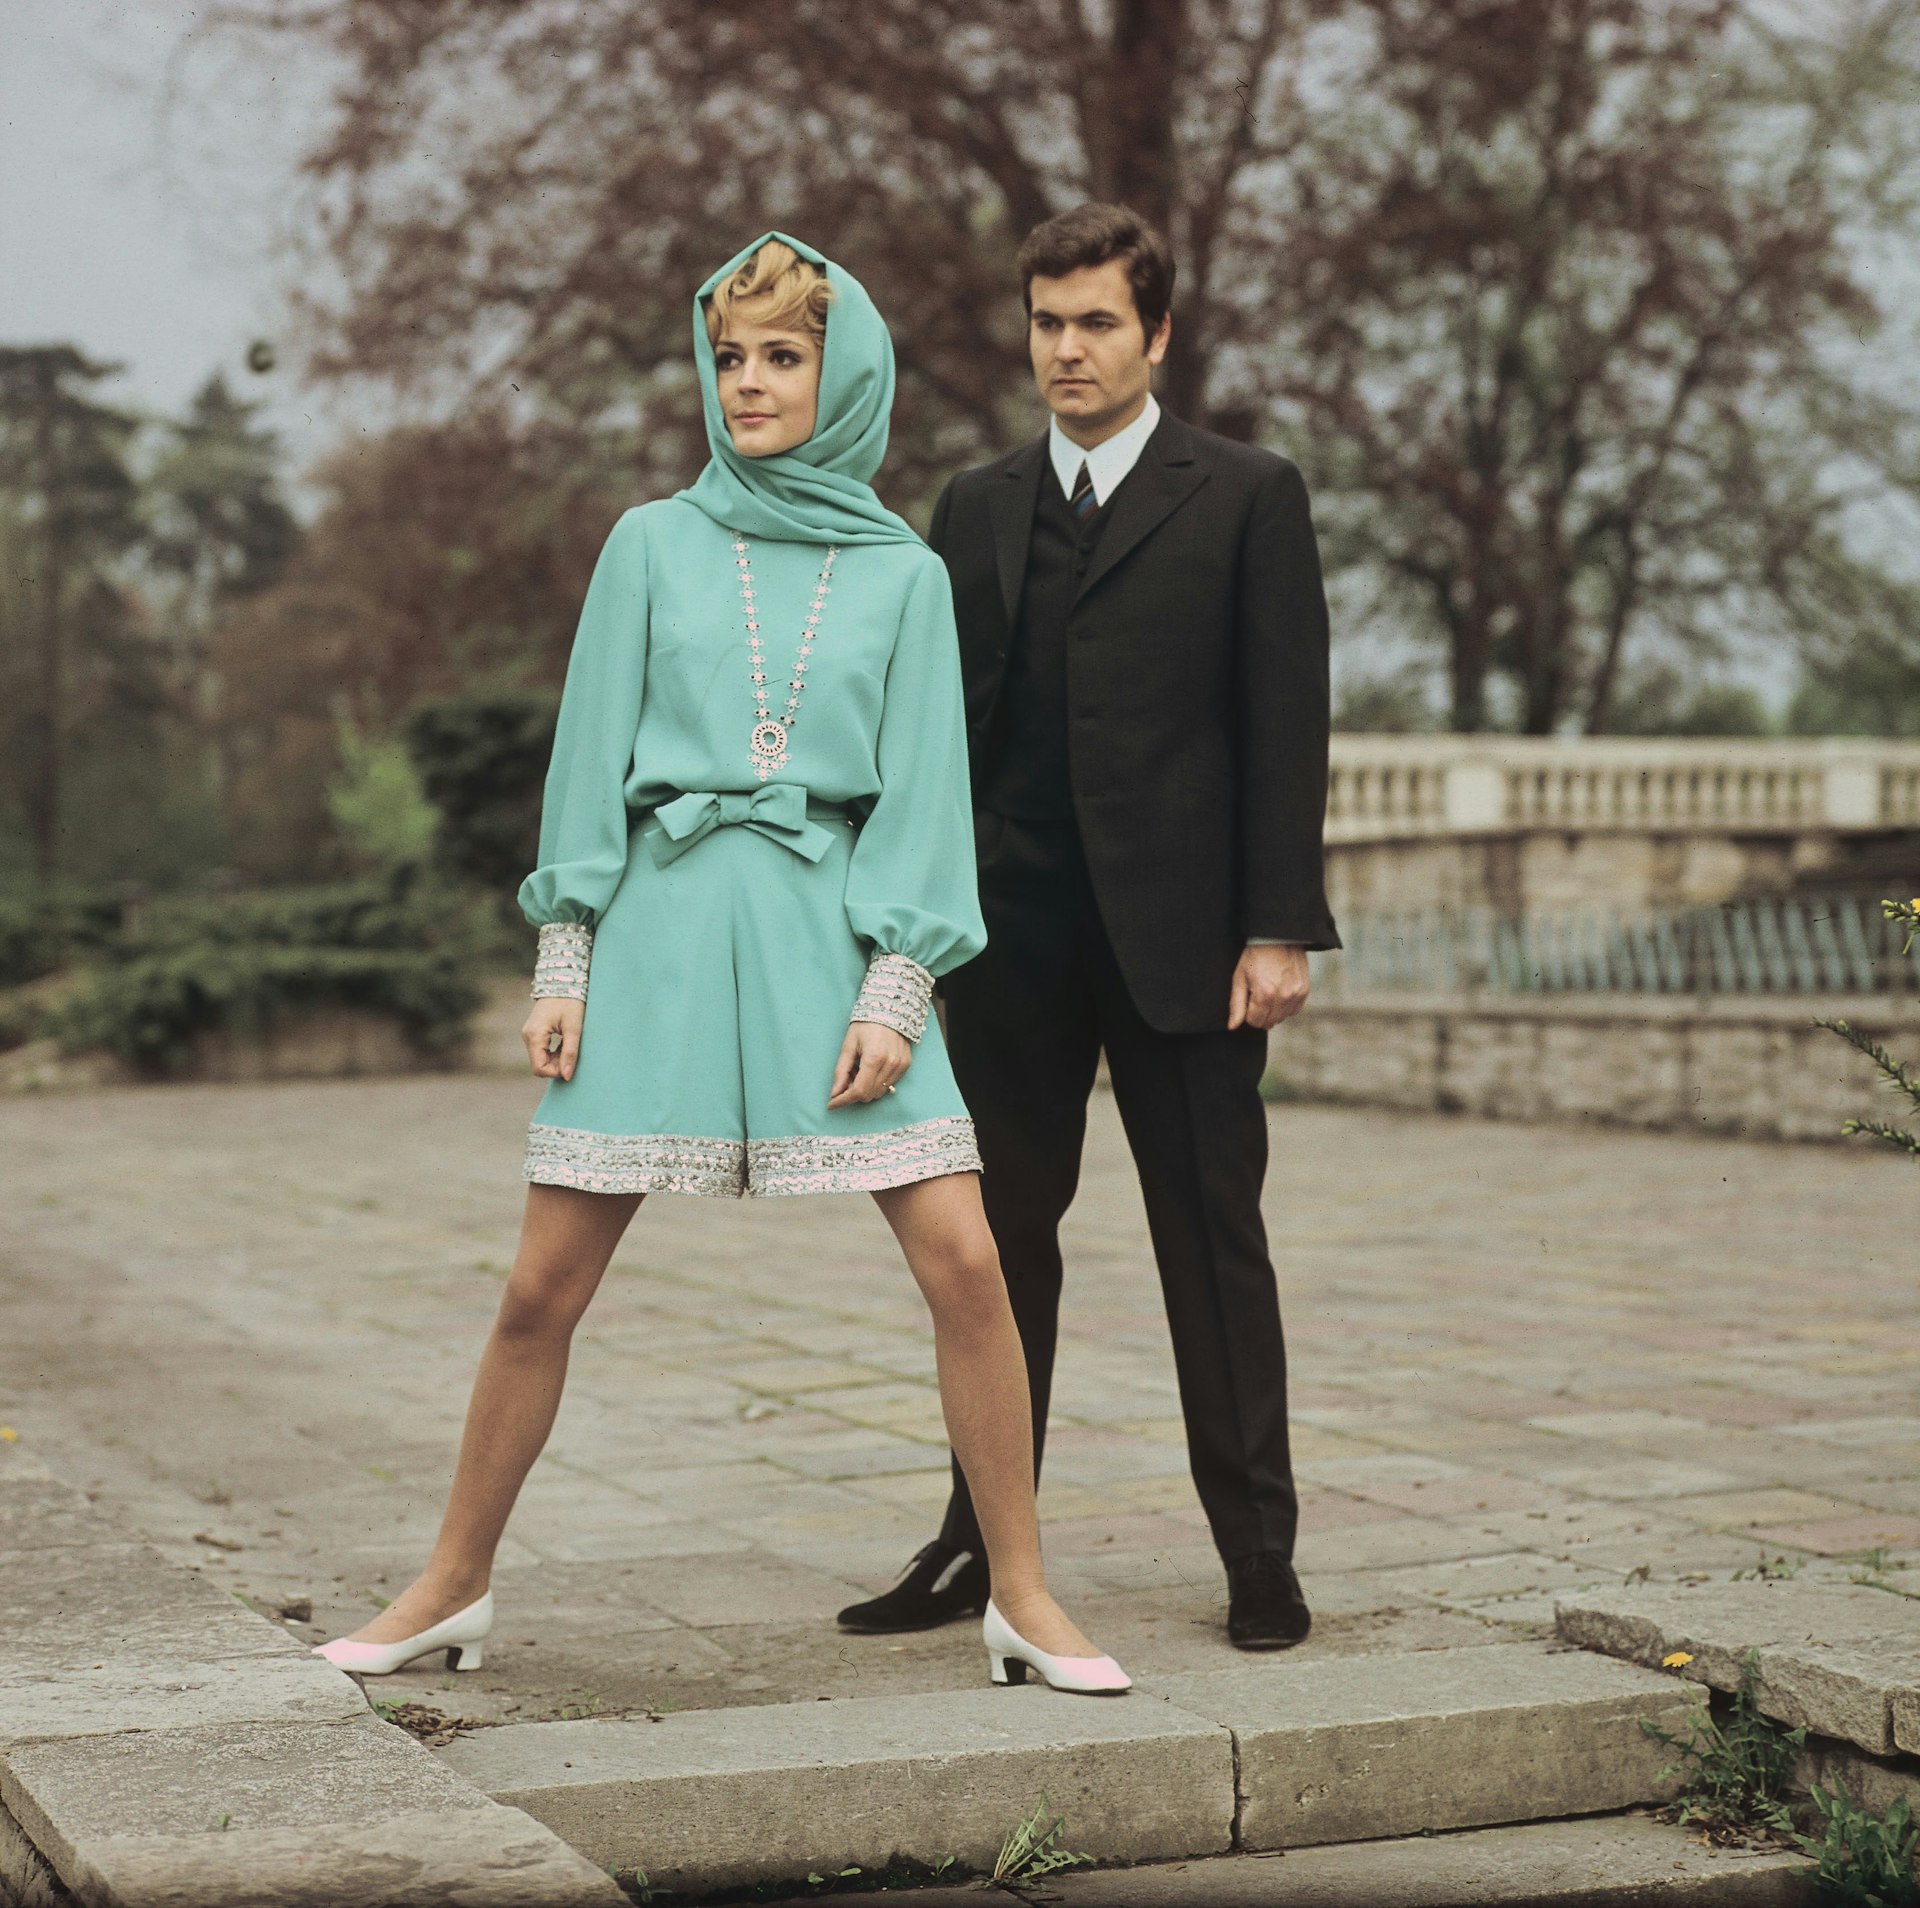 Identities. Easter Germany Fashion Photo.  Gunter Roubitzc. 1960-80. AKG Images   